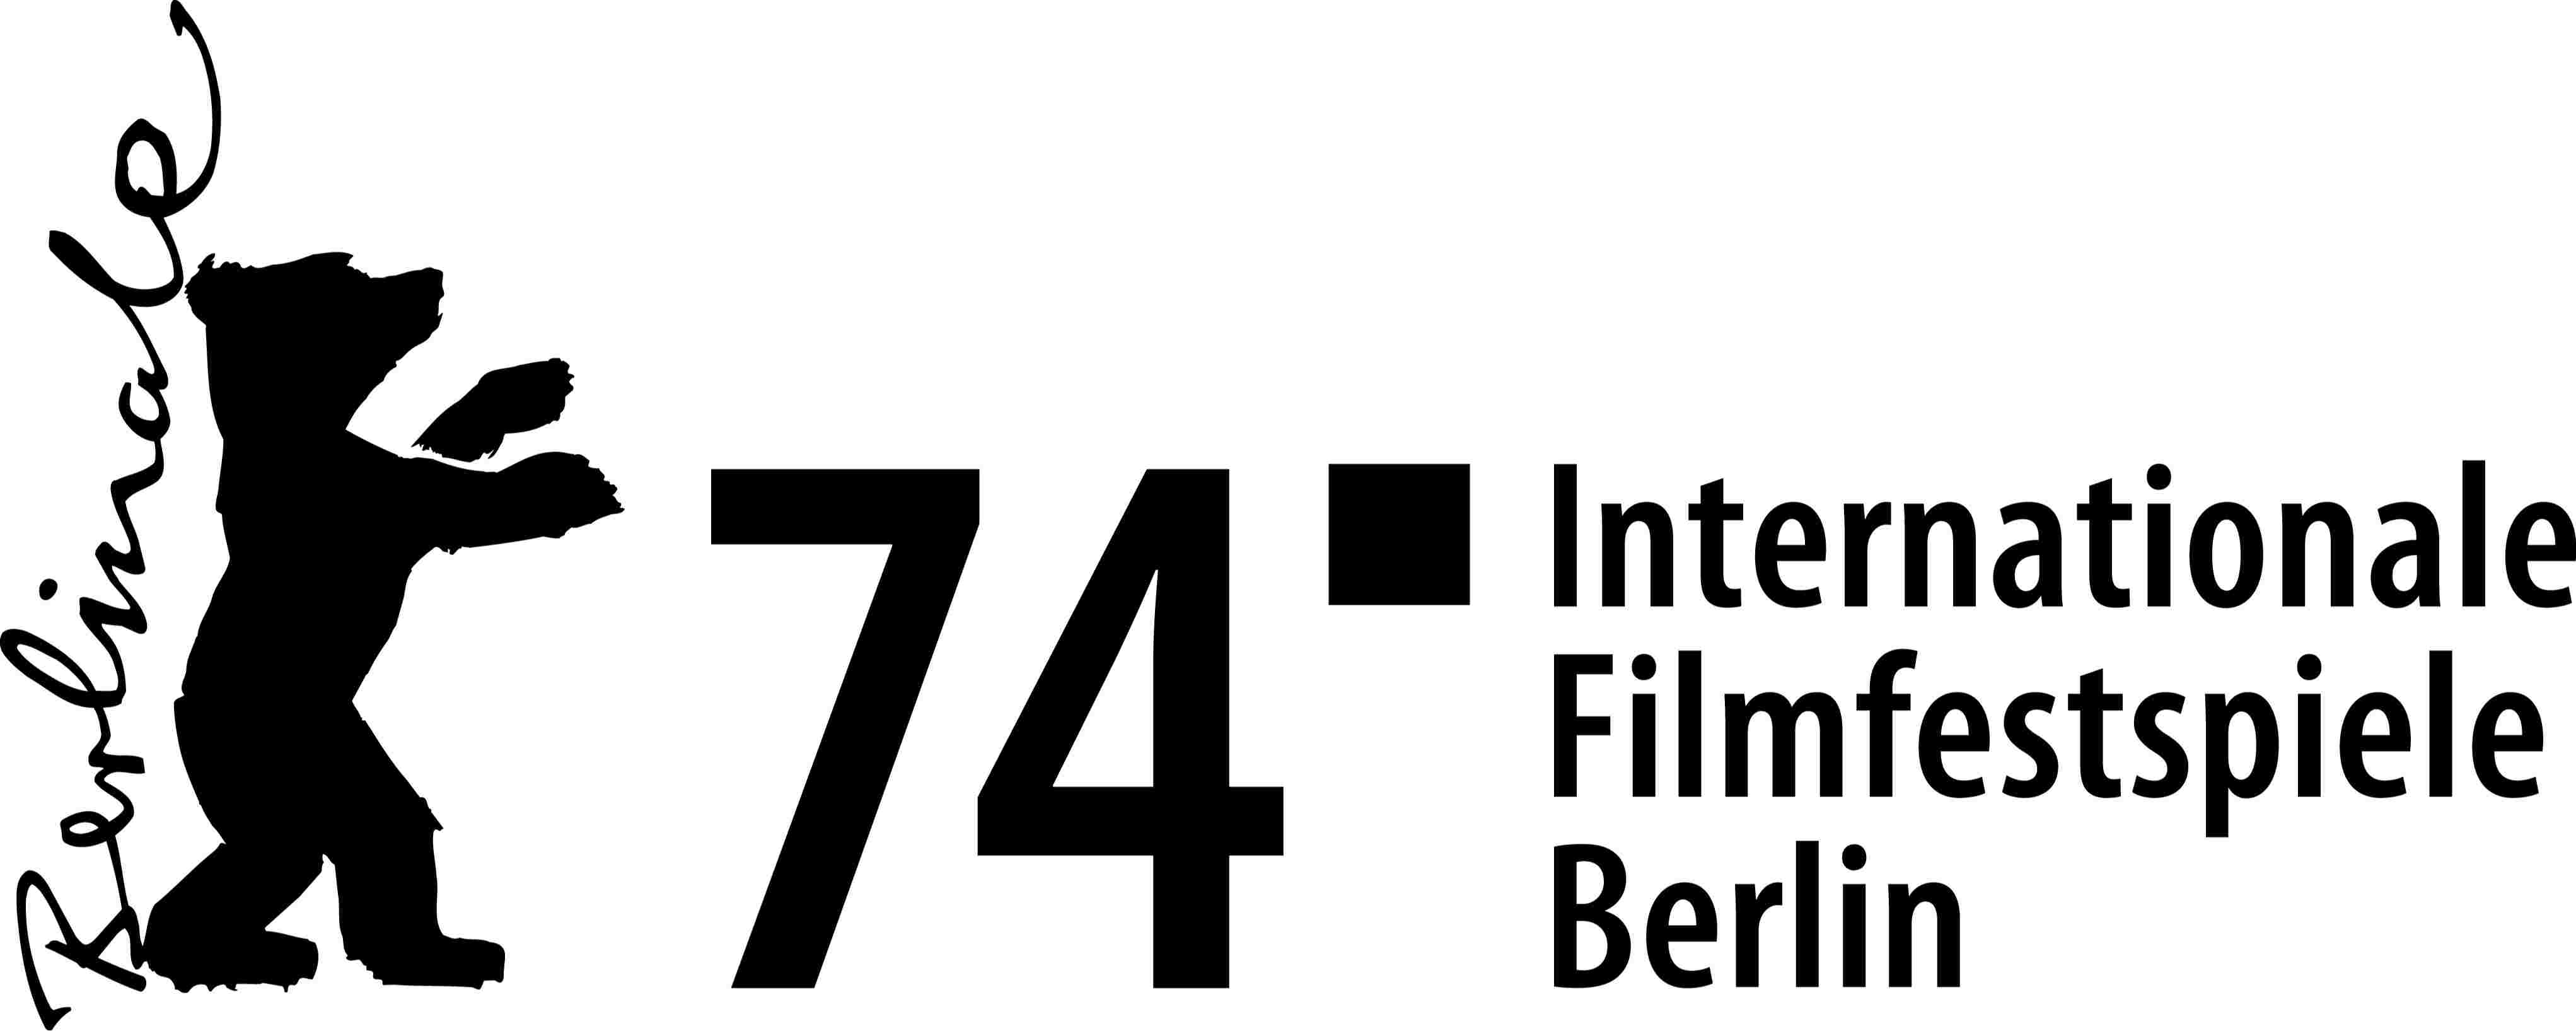 Berlinale 74